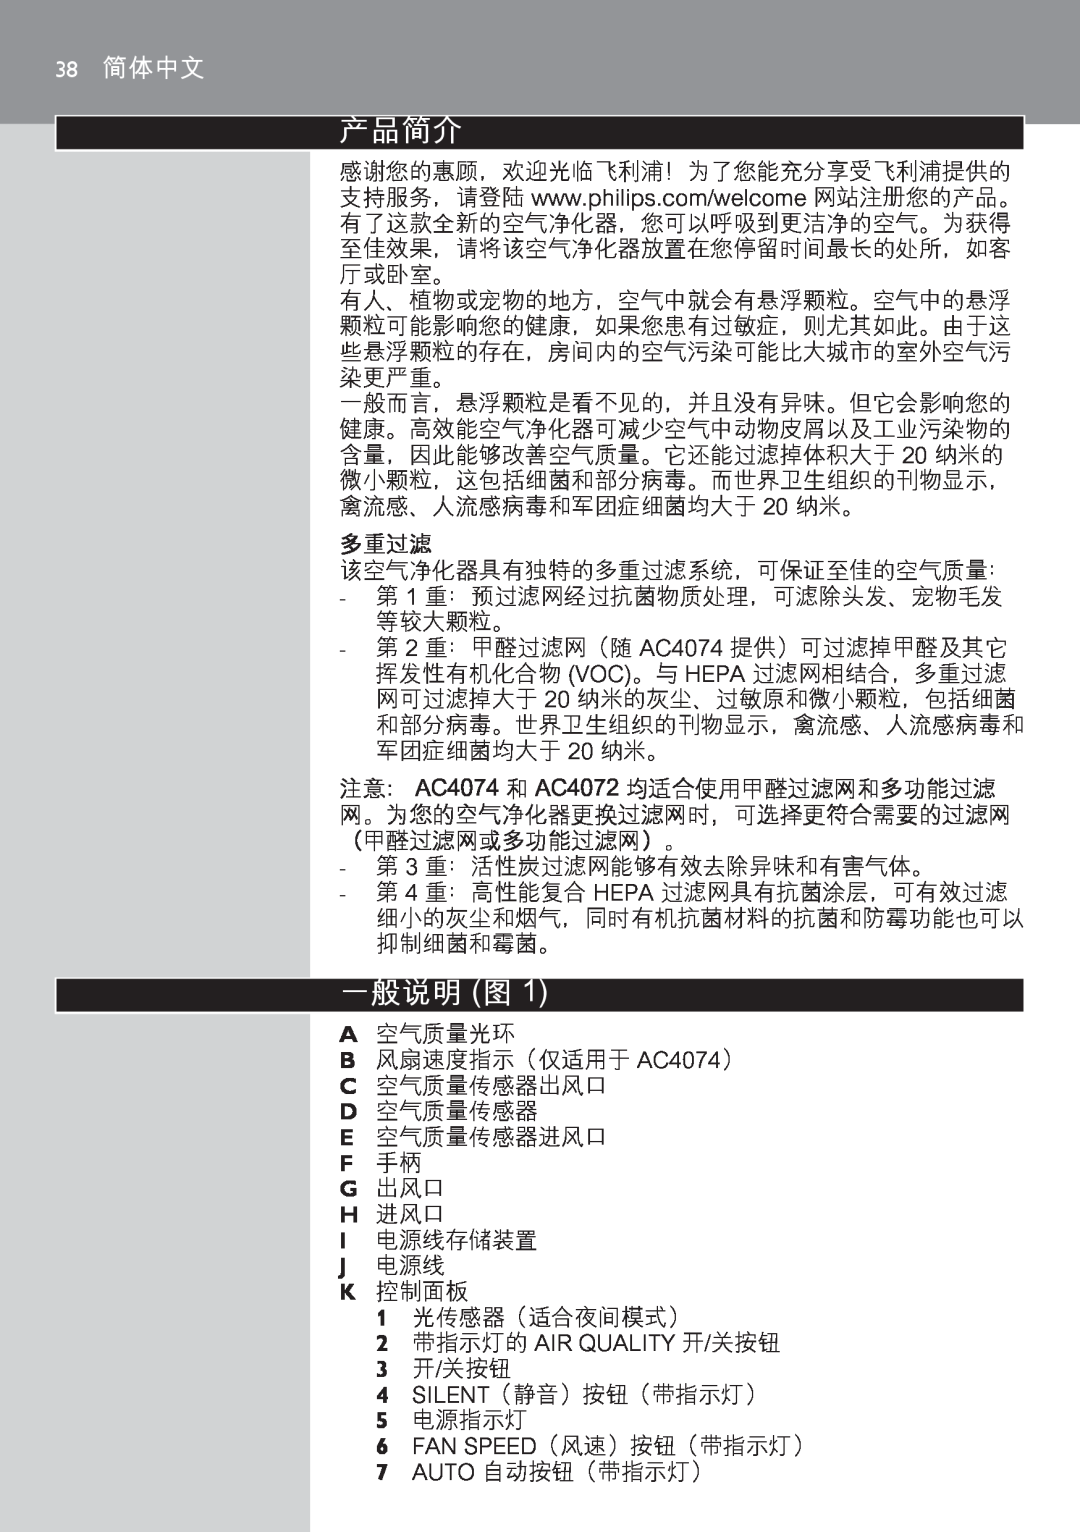 Philips AC4074 manual 产品简介, 一般说明图1, 多重过滤, 38简体中文 